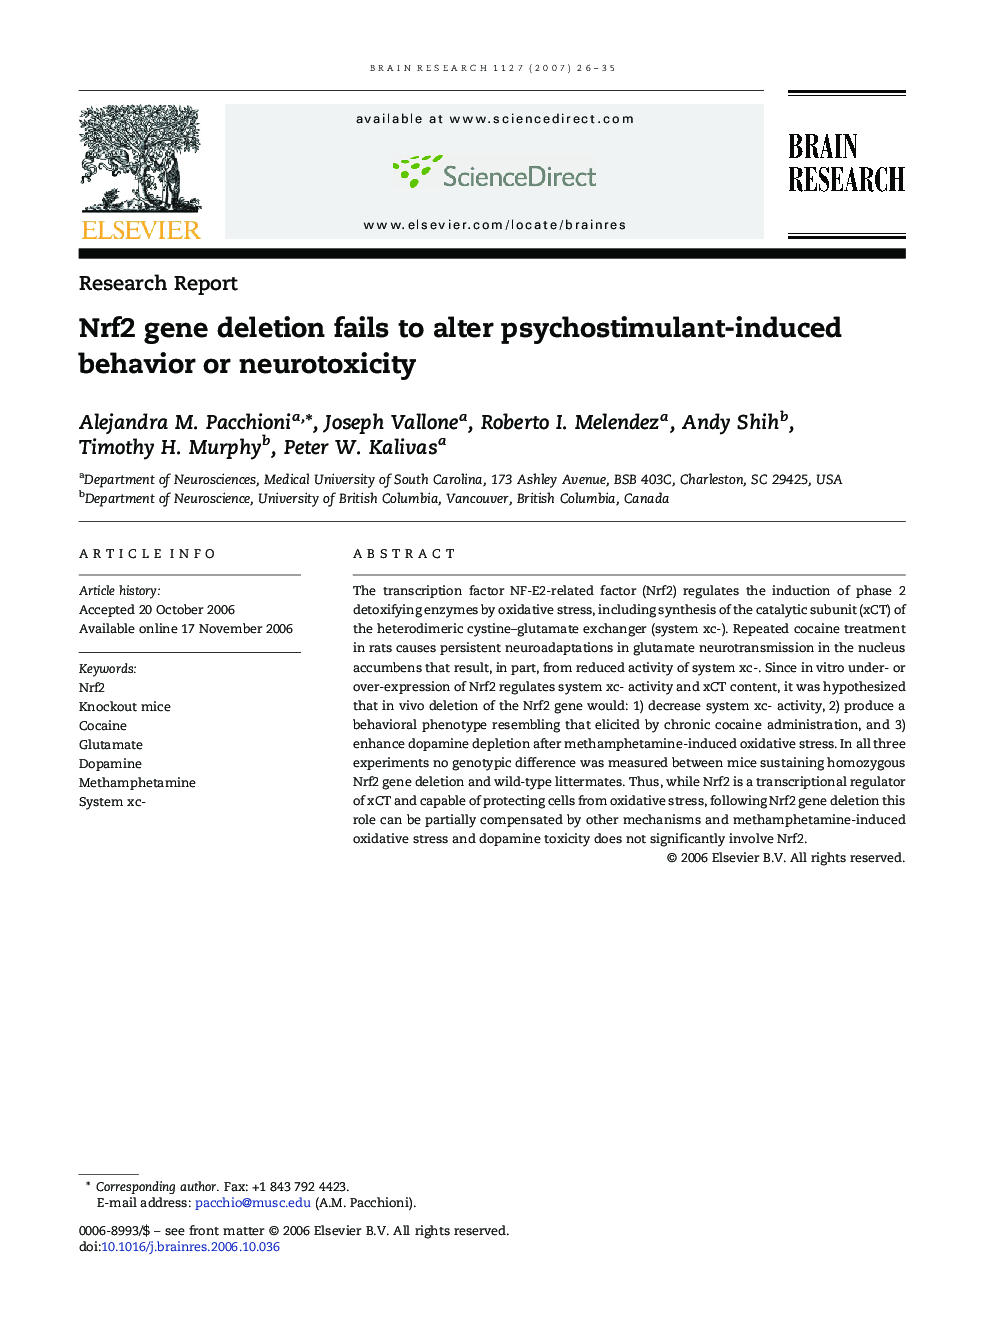 Nrf2 gene deletion fails to alter psychostimulant-induced behavior or neurotoxicity